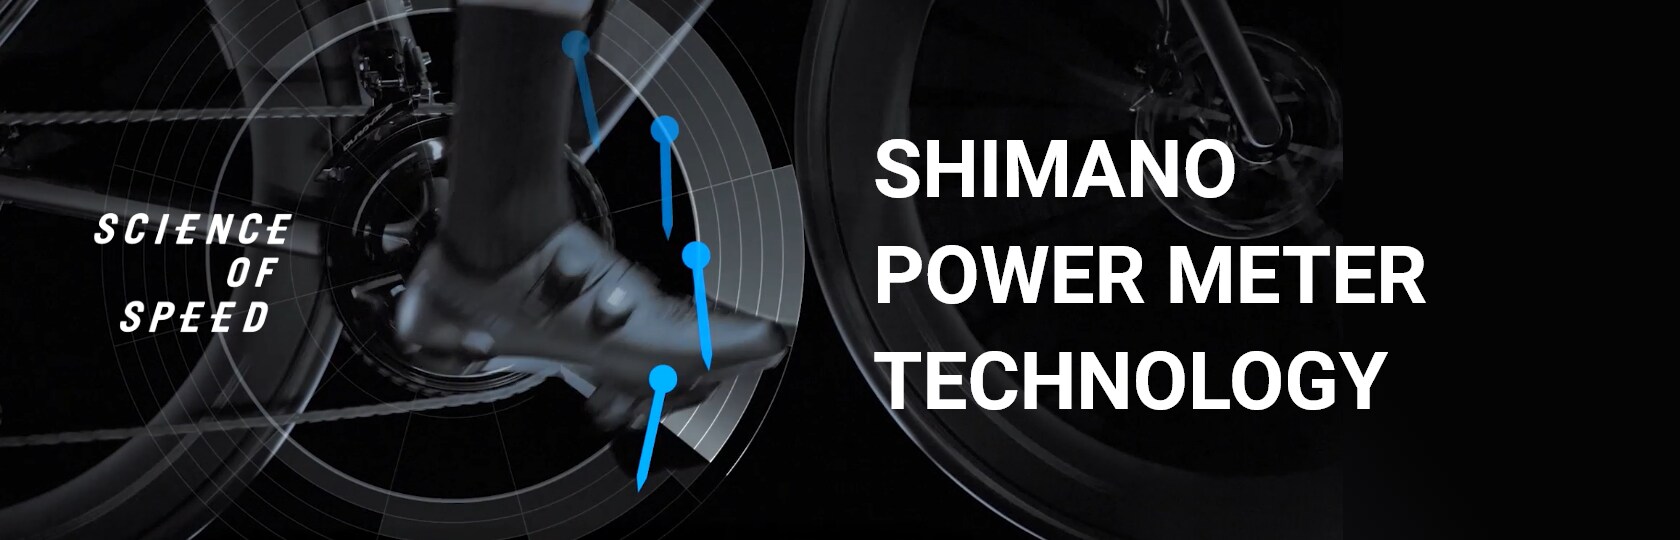 SHIMANO POWER METER TECHNOLOGY